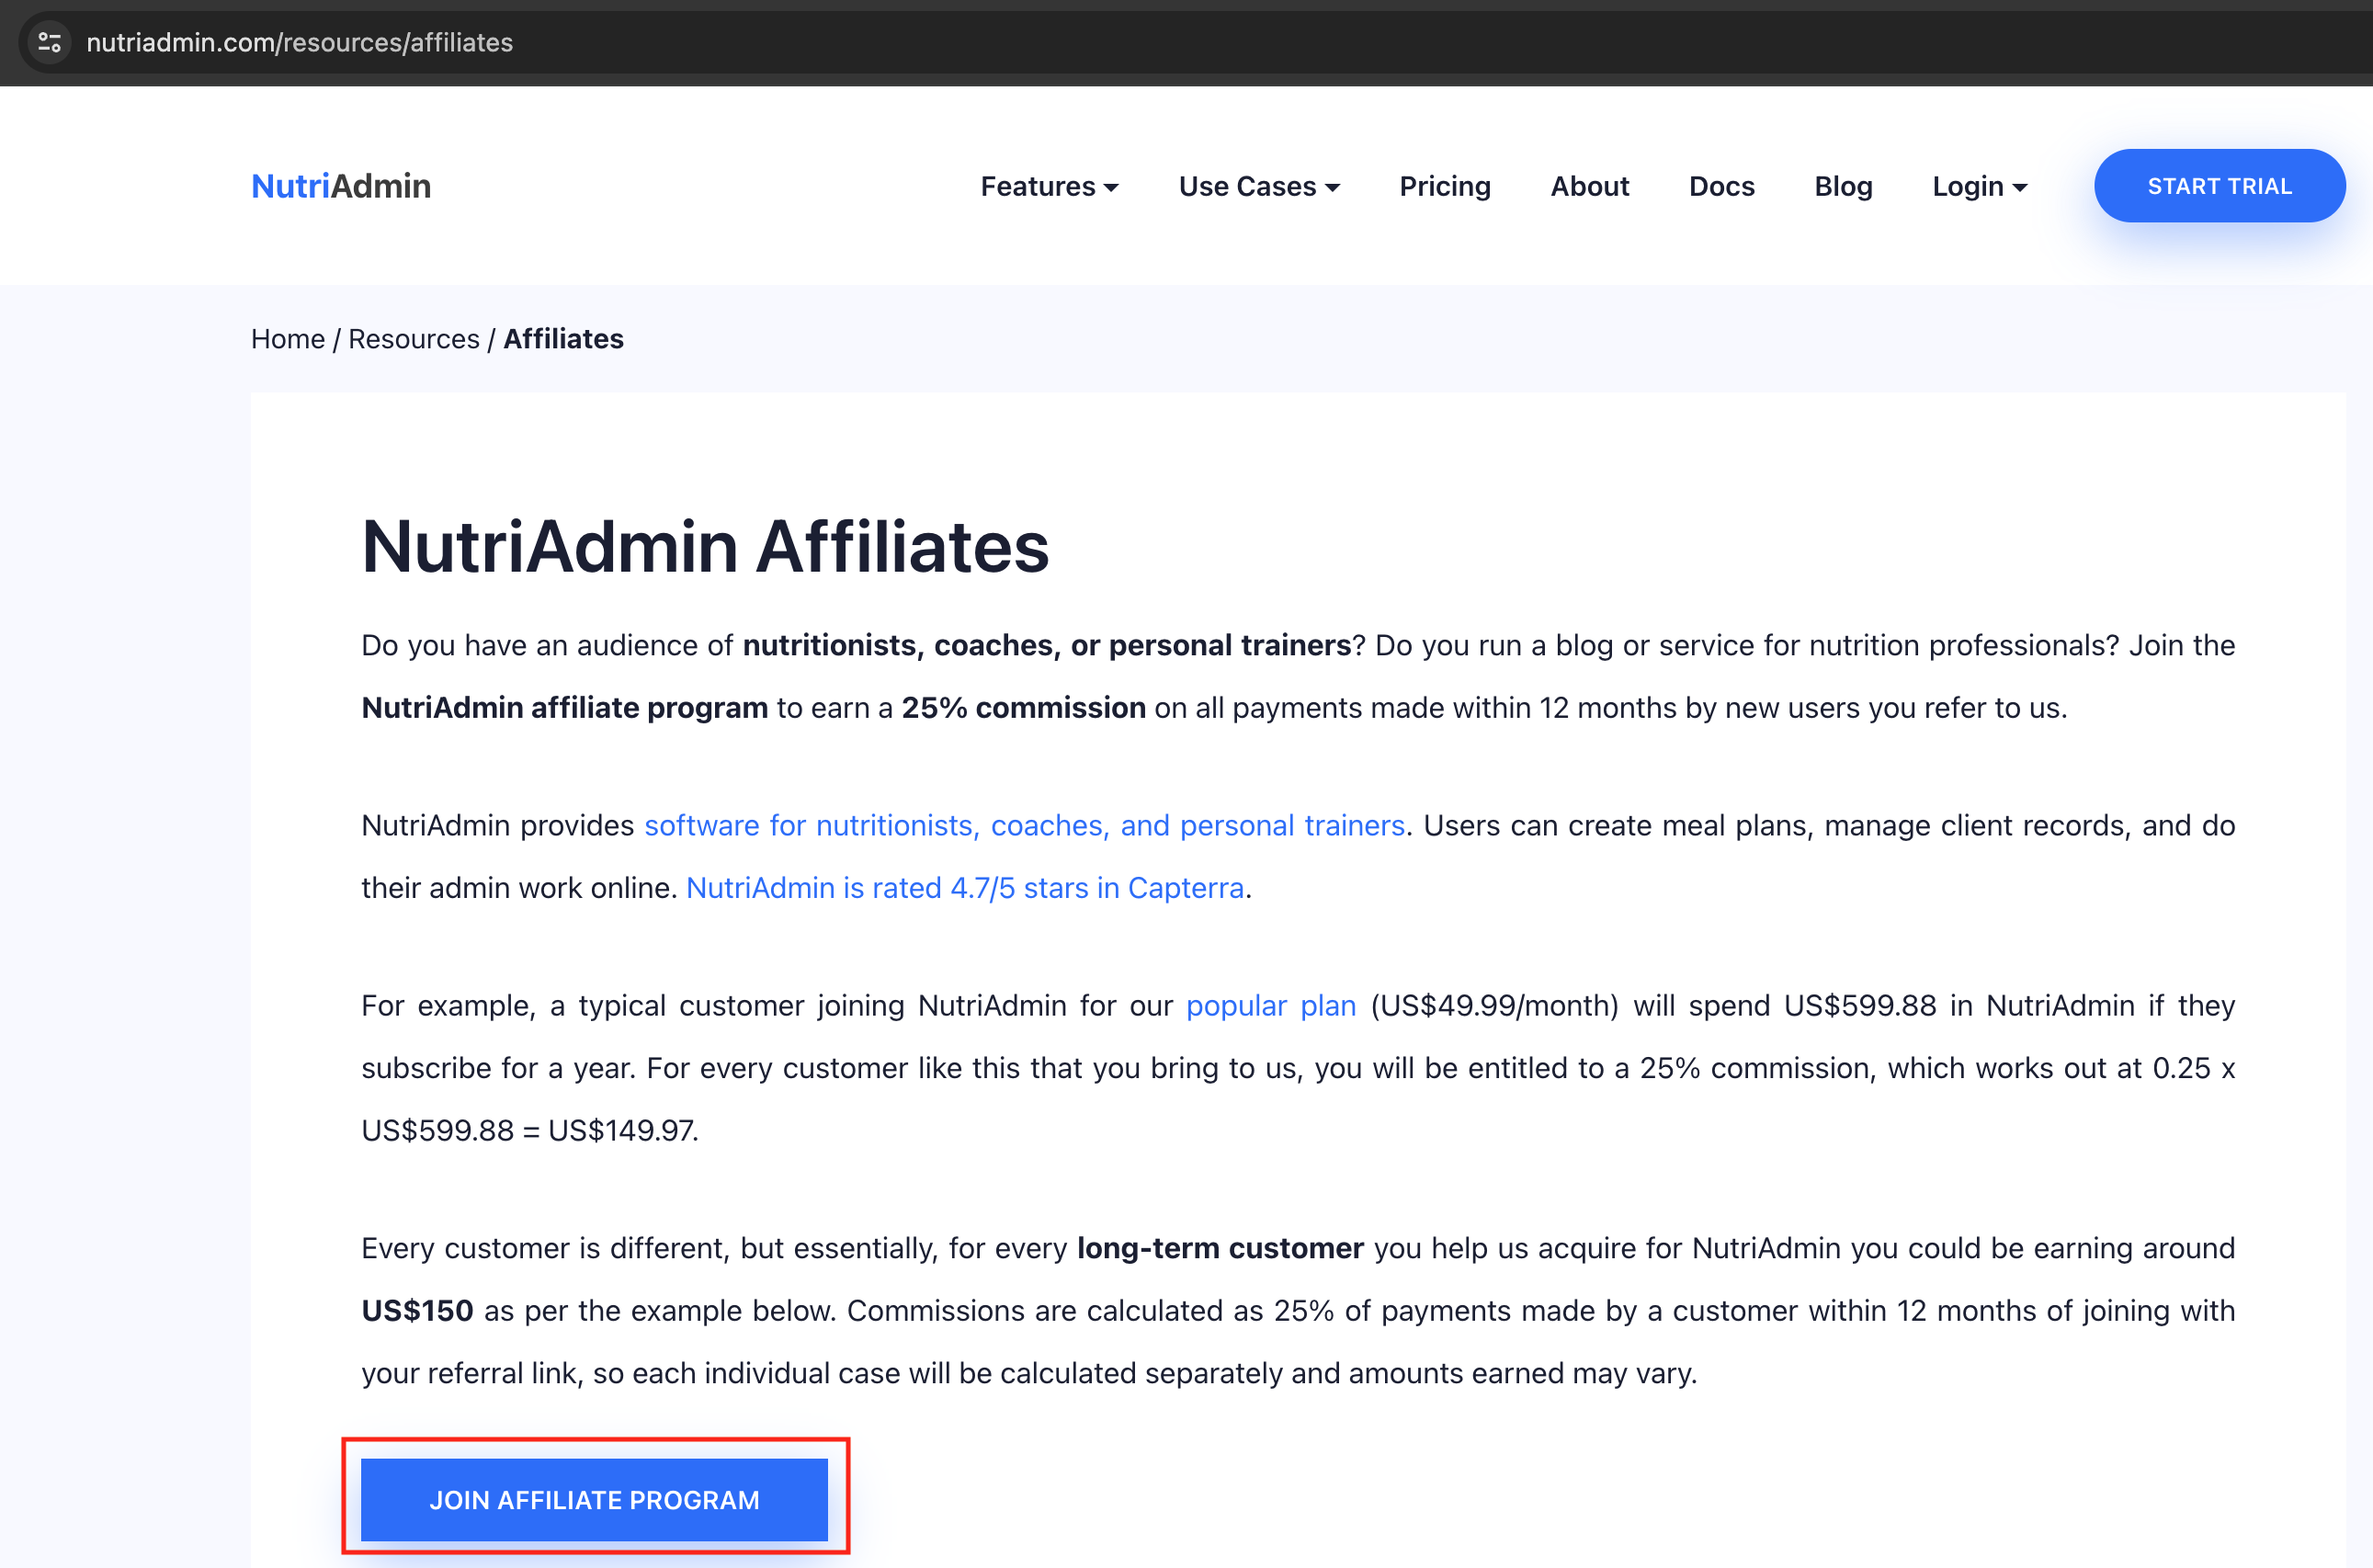 nutriadmin affiliates main page